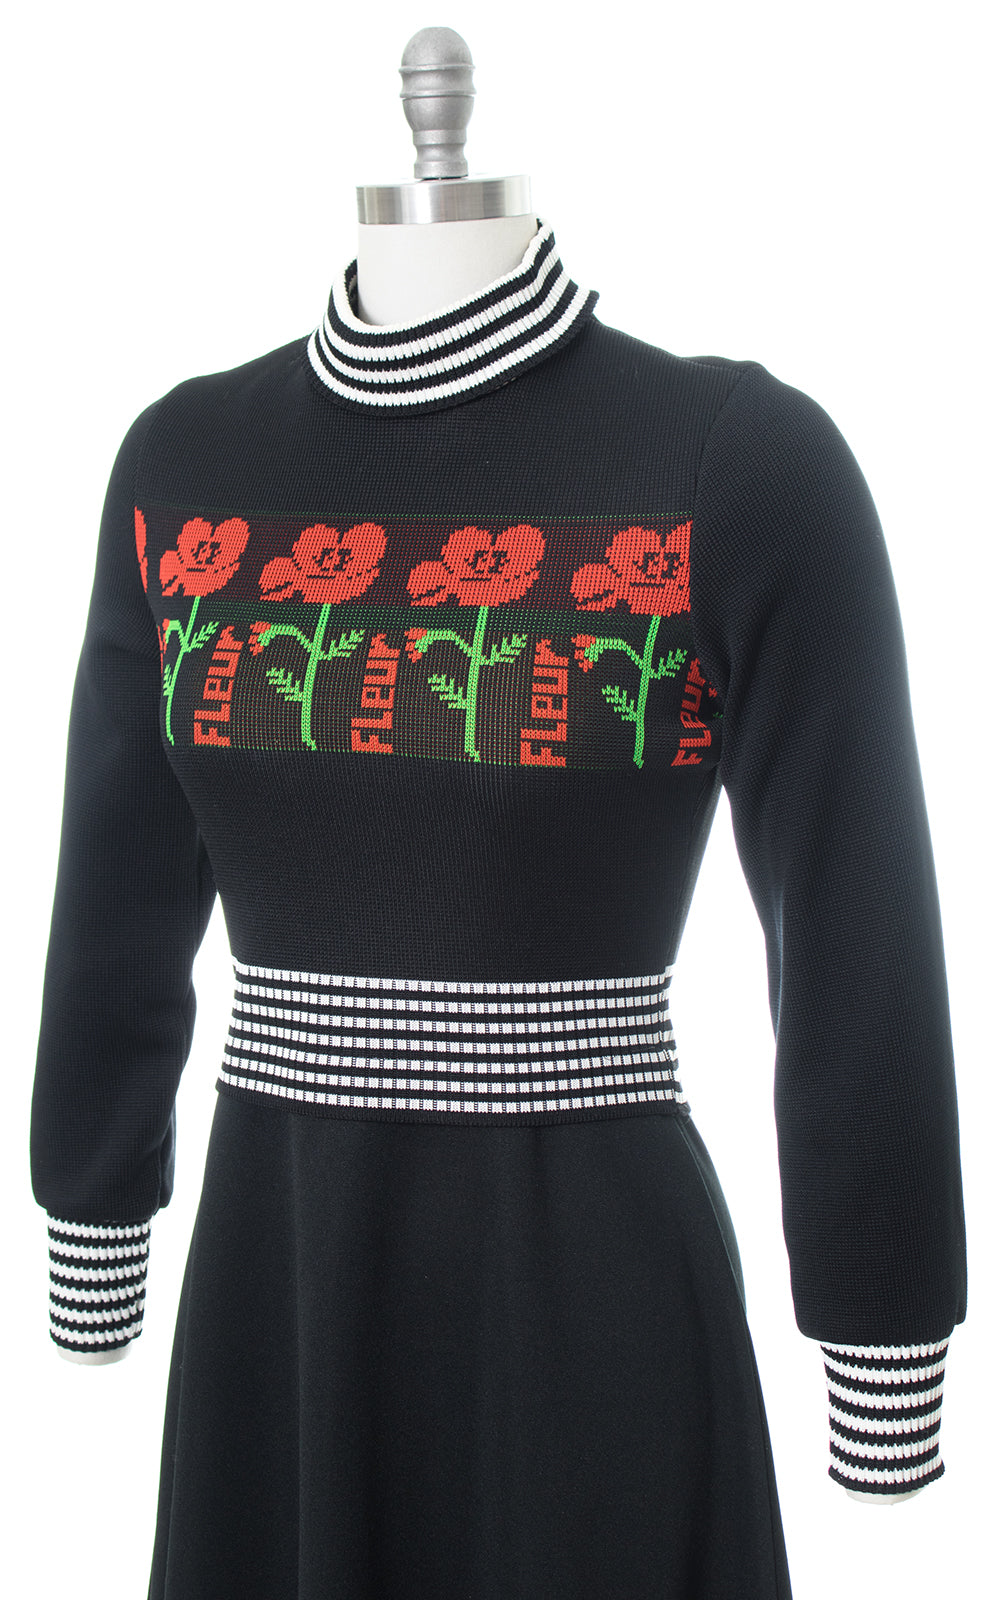 1970s "Fleur" Poppy Floral Novelty Print Knit Dress